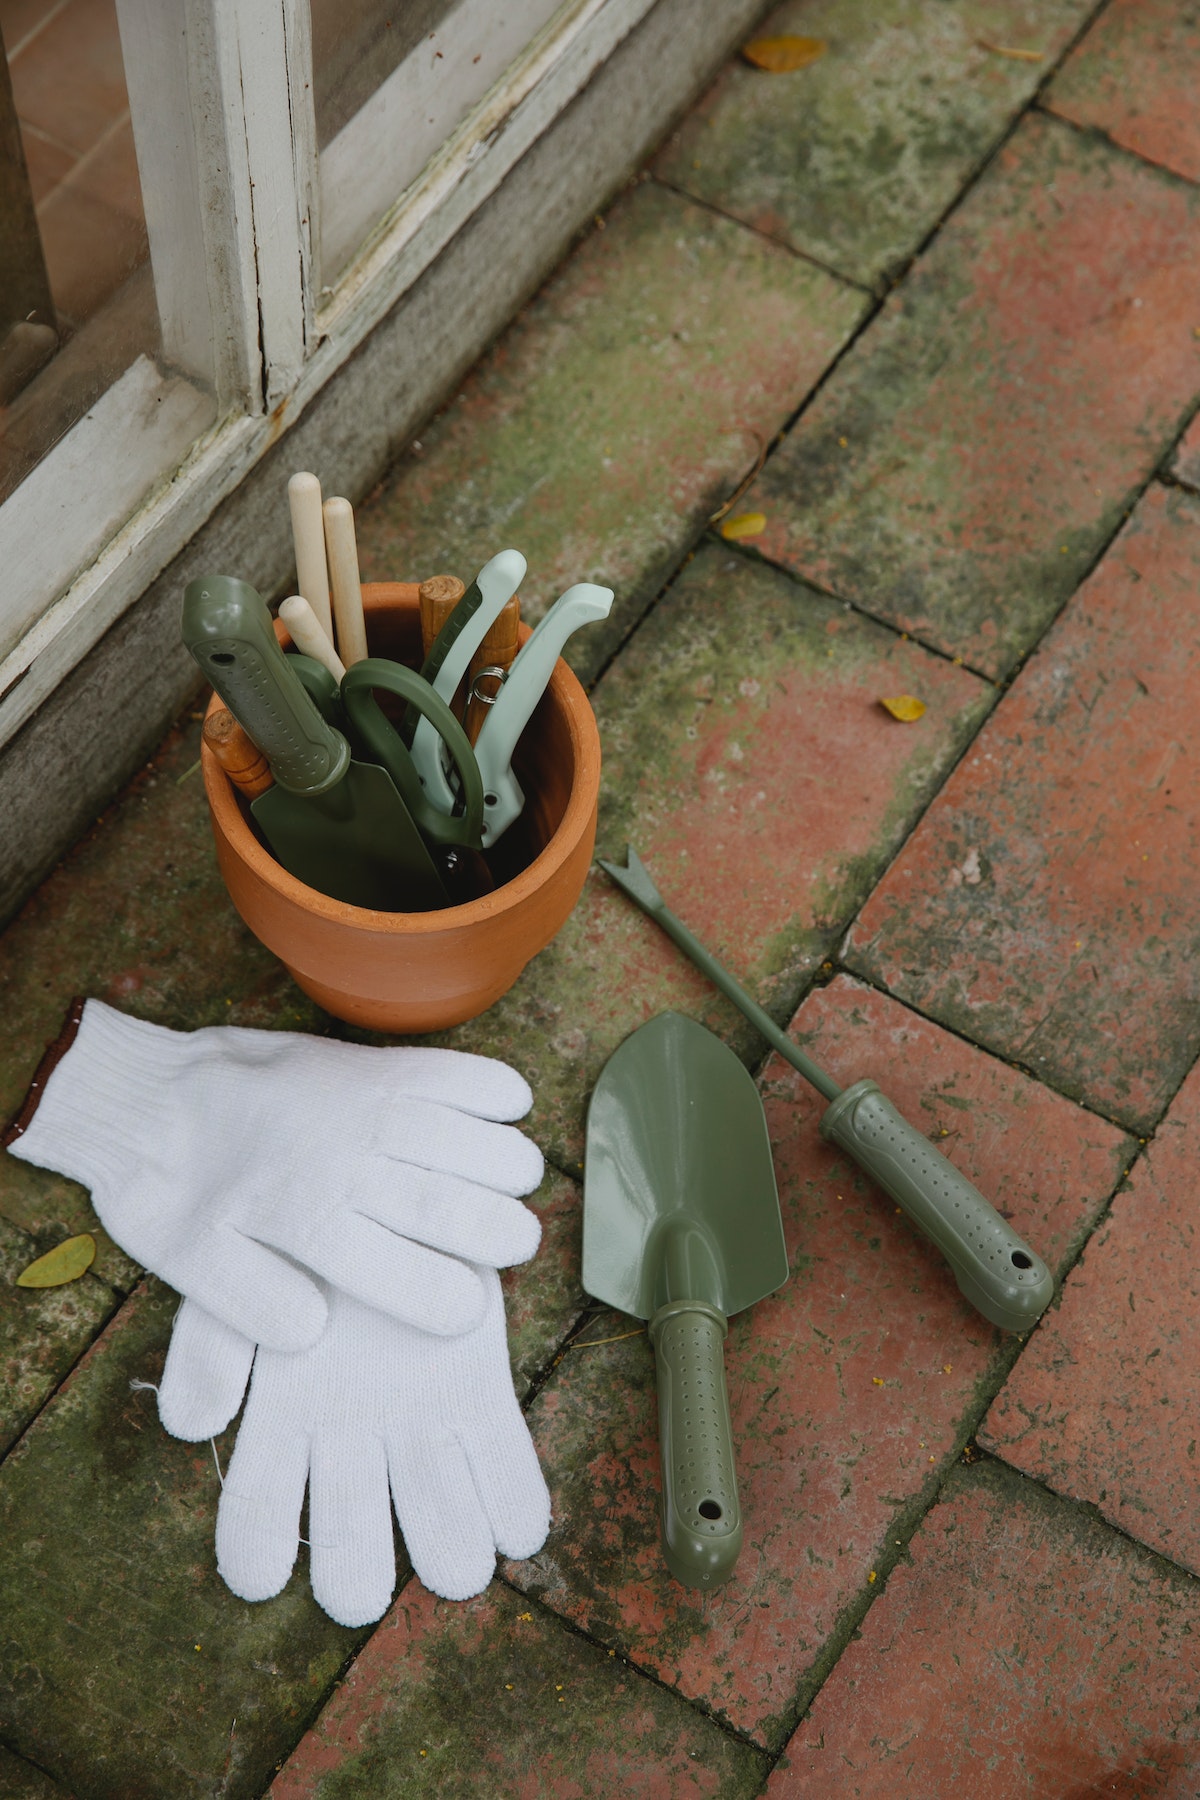 garden tools and gloves on brick floor